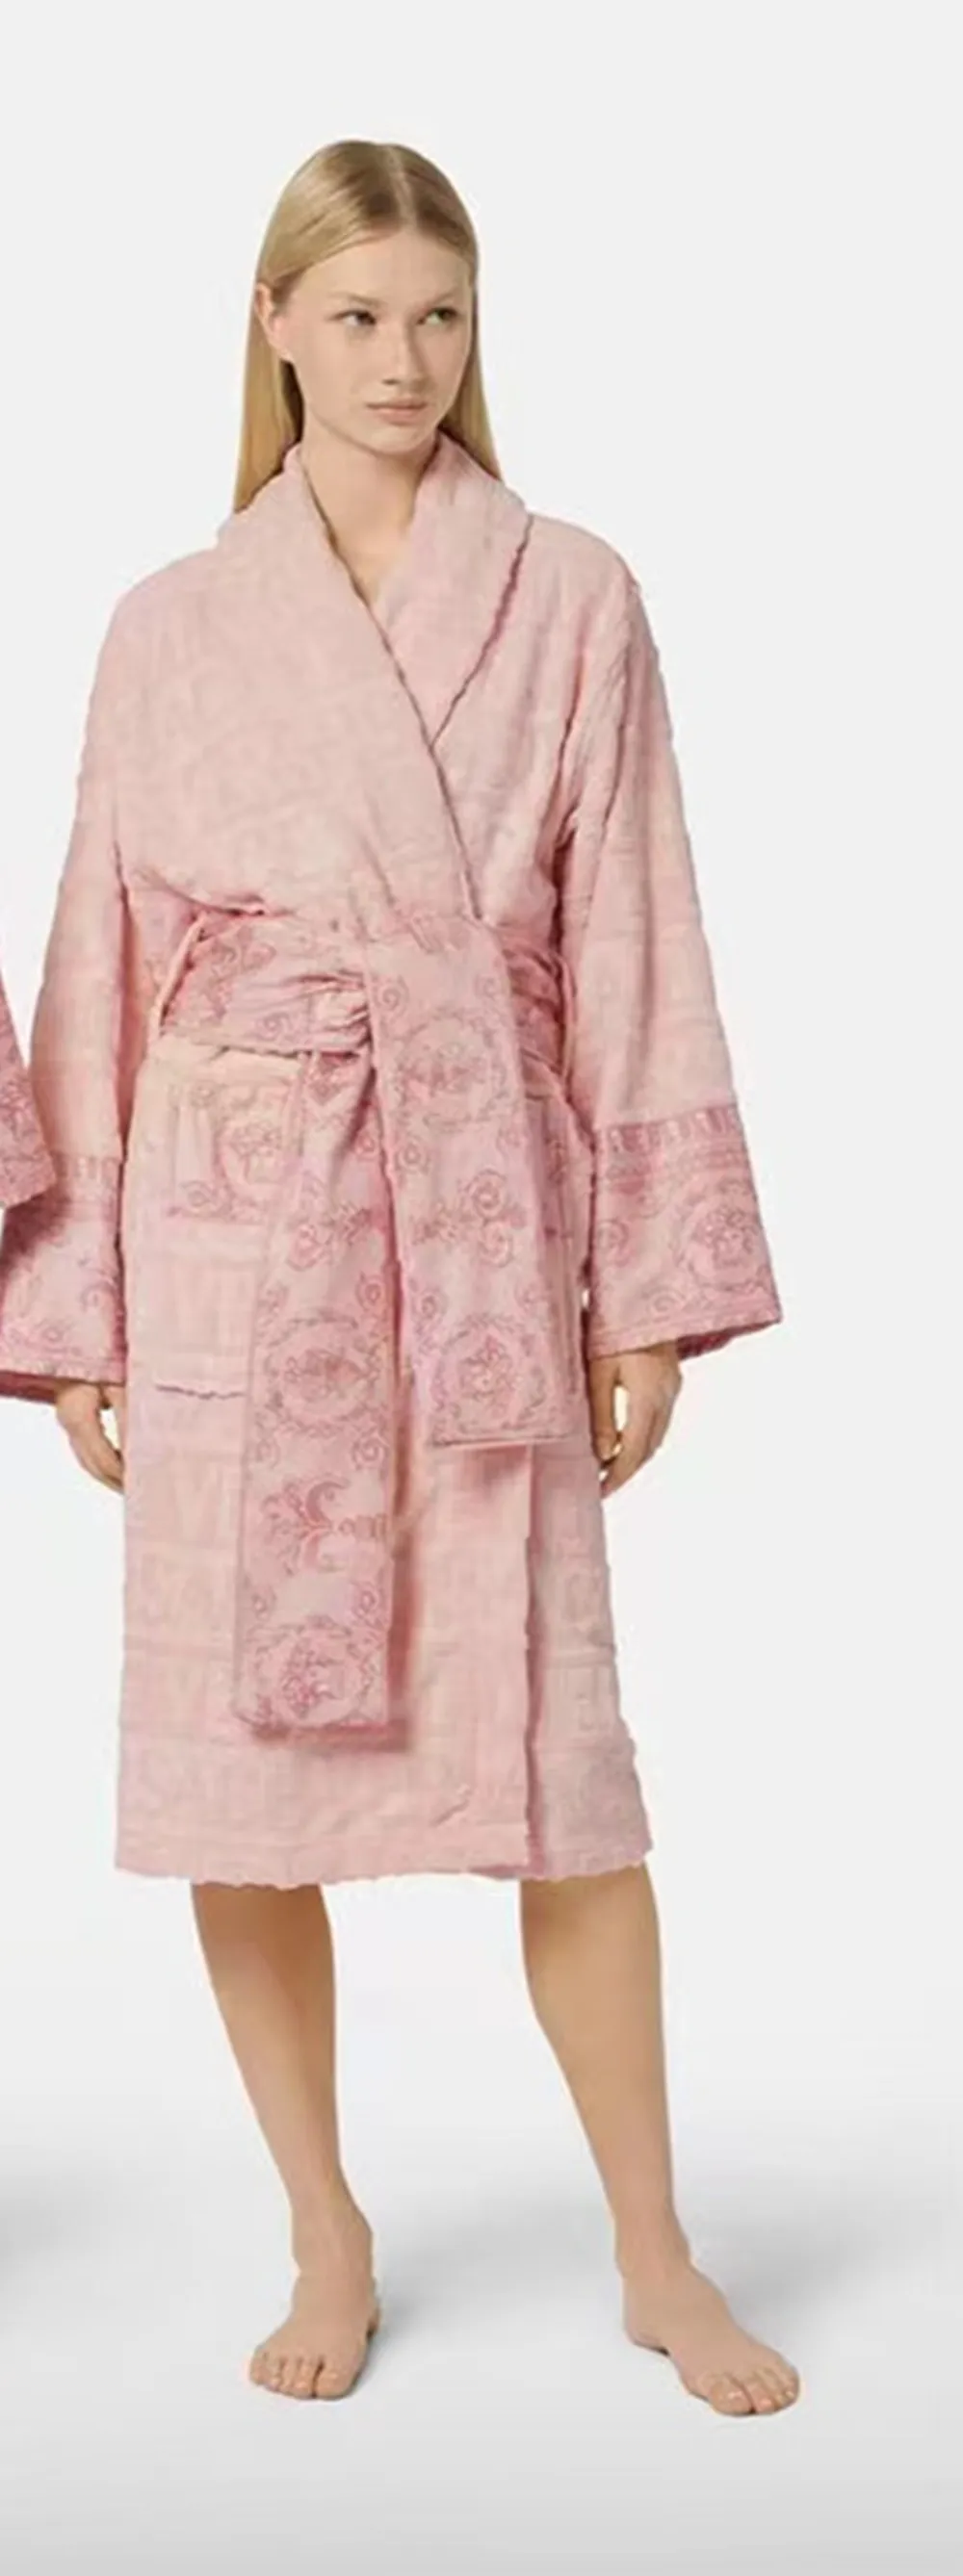 Lucky Brand Rayon Nightgowns & Sleep Shirts for Women | Mercari